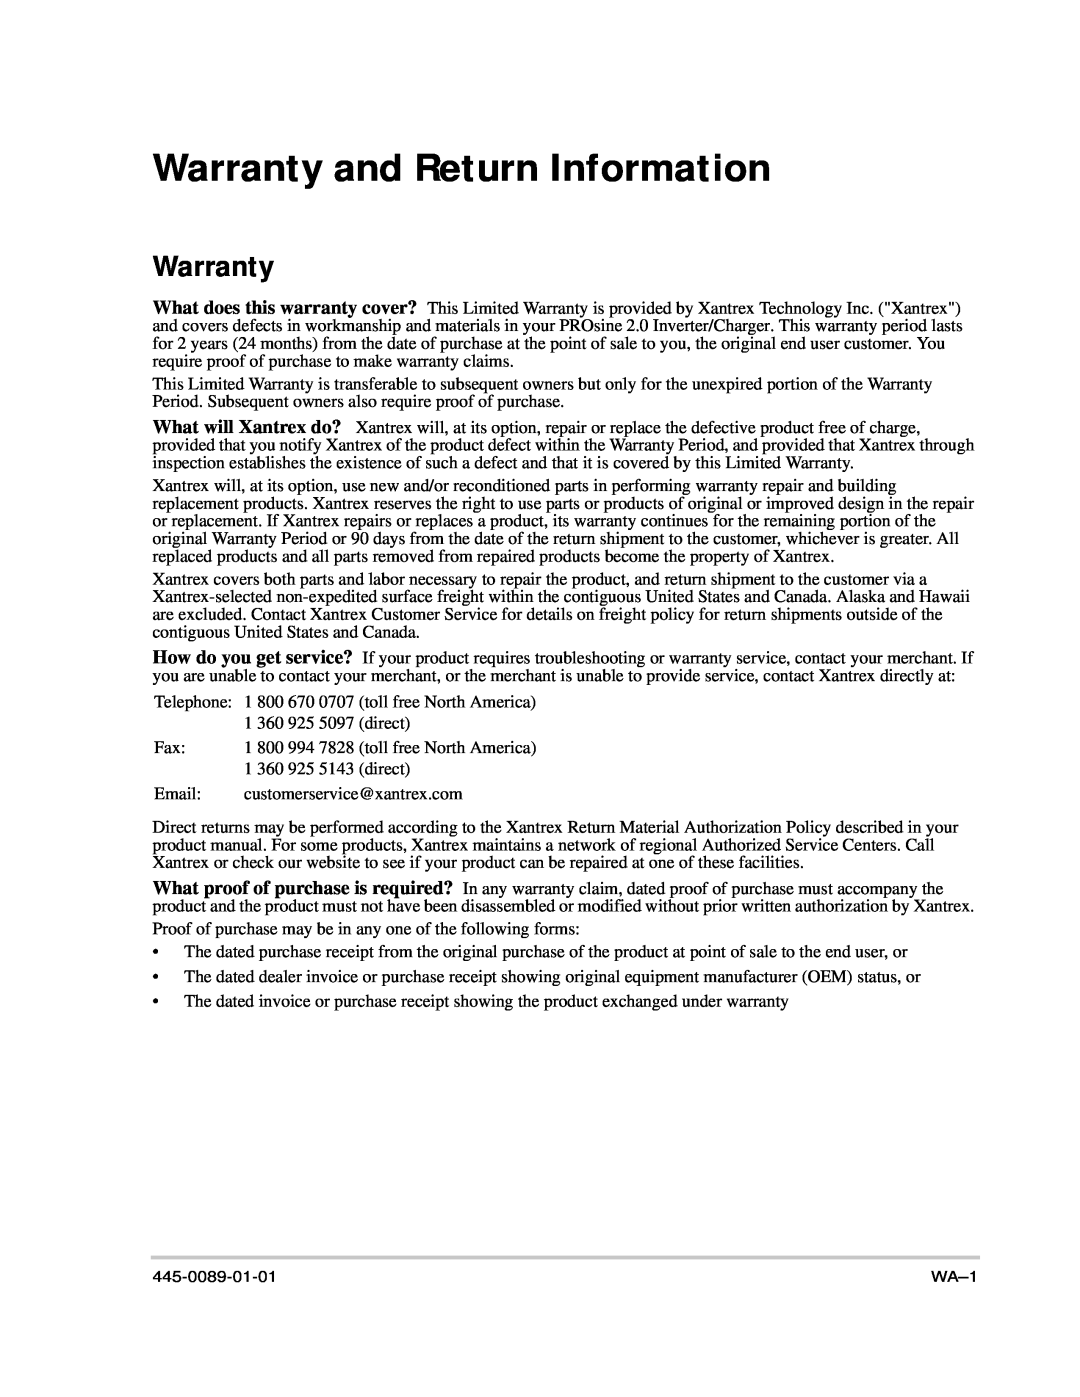 Xantrex Technology PROsine 2.0 user manual Warranty and Return Information 